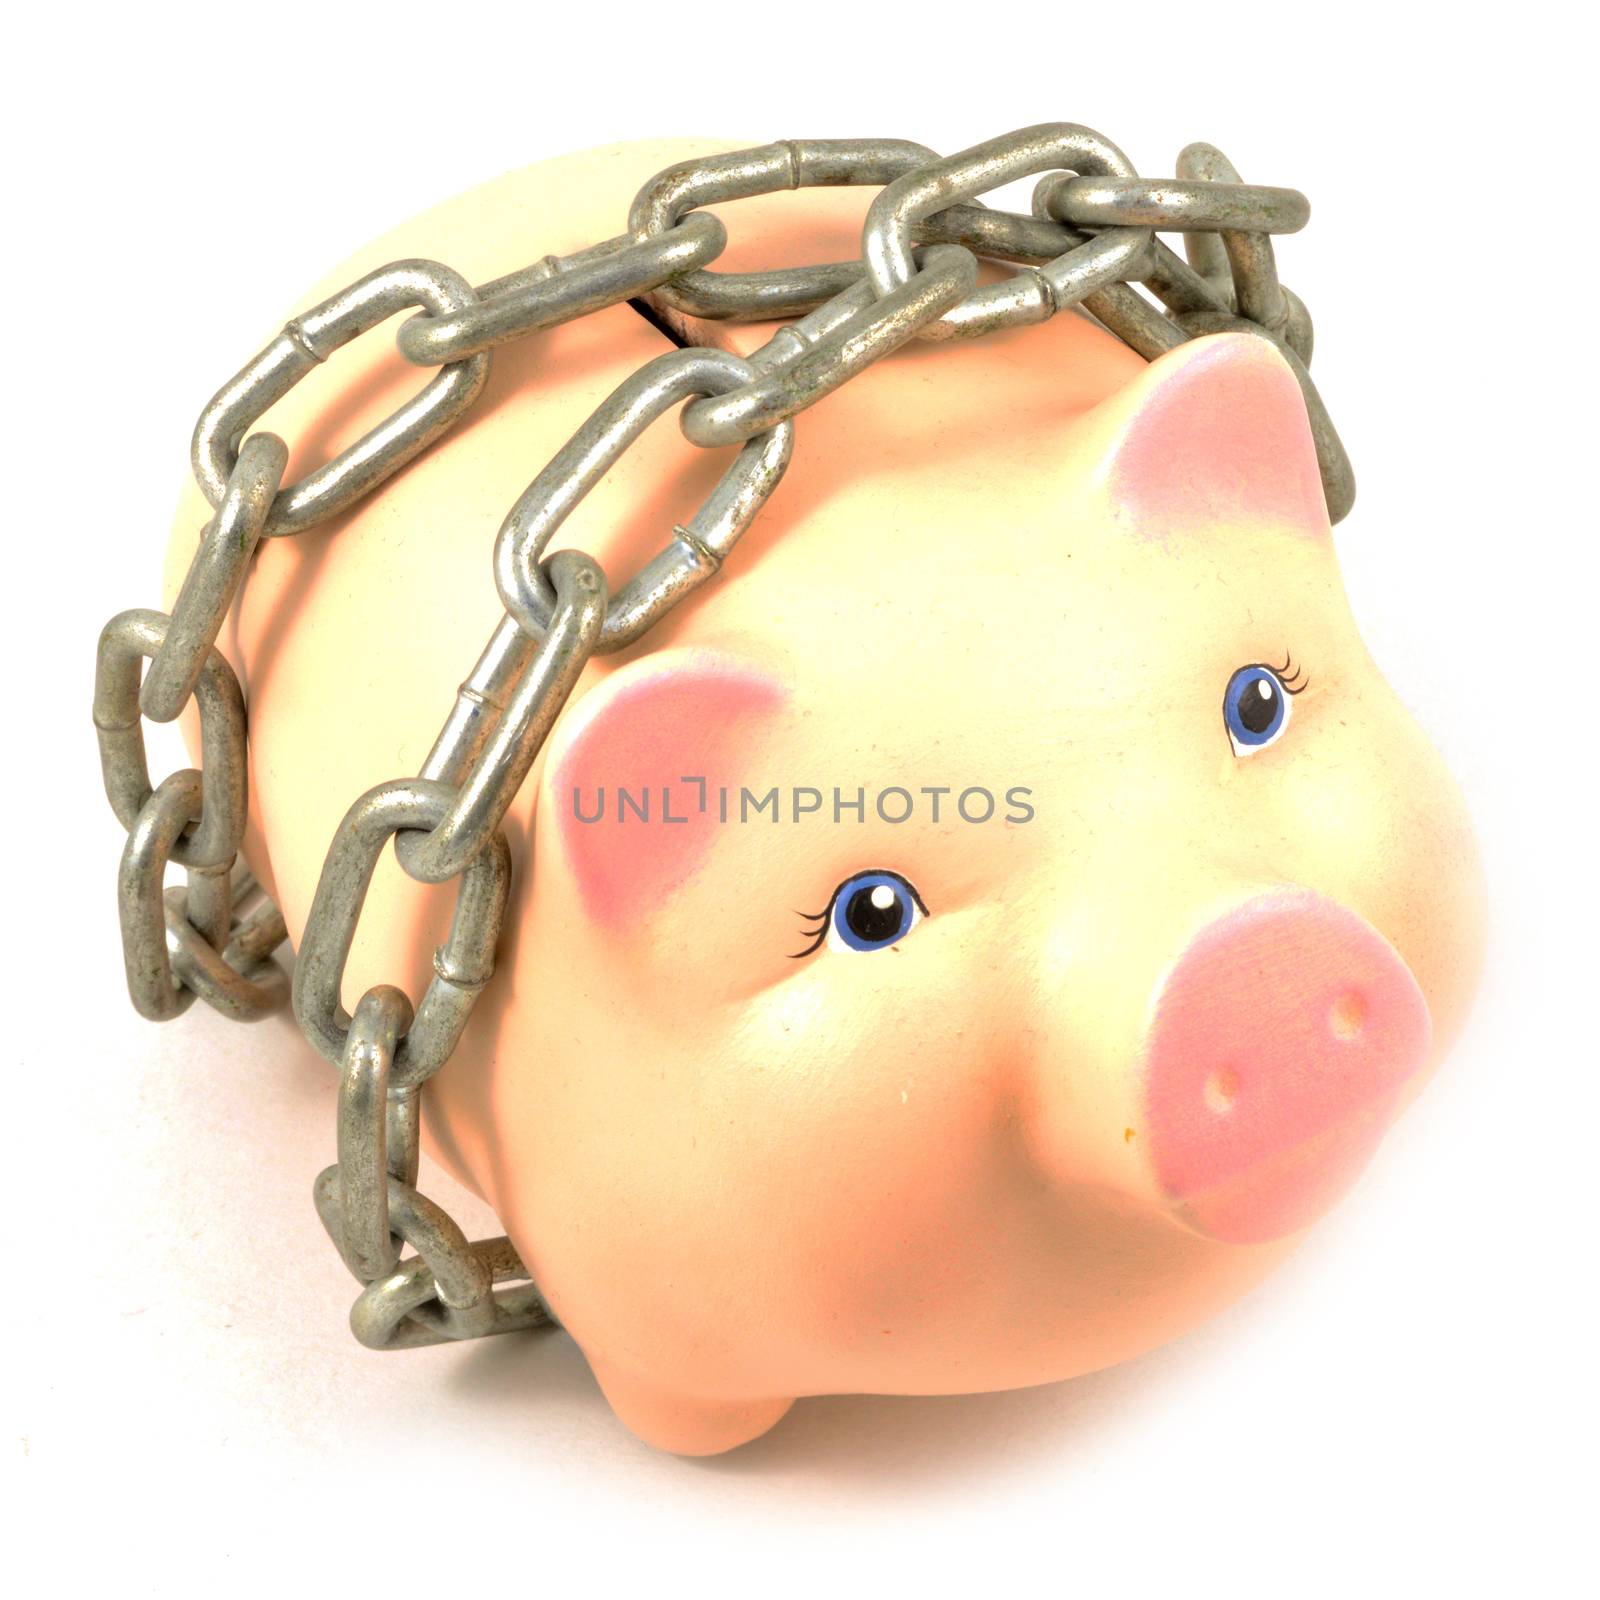 Savings Lockdown by AlphaBaby